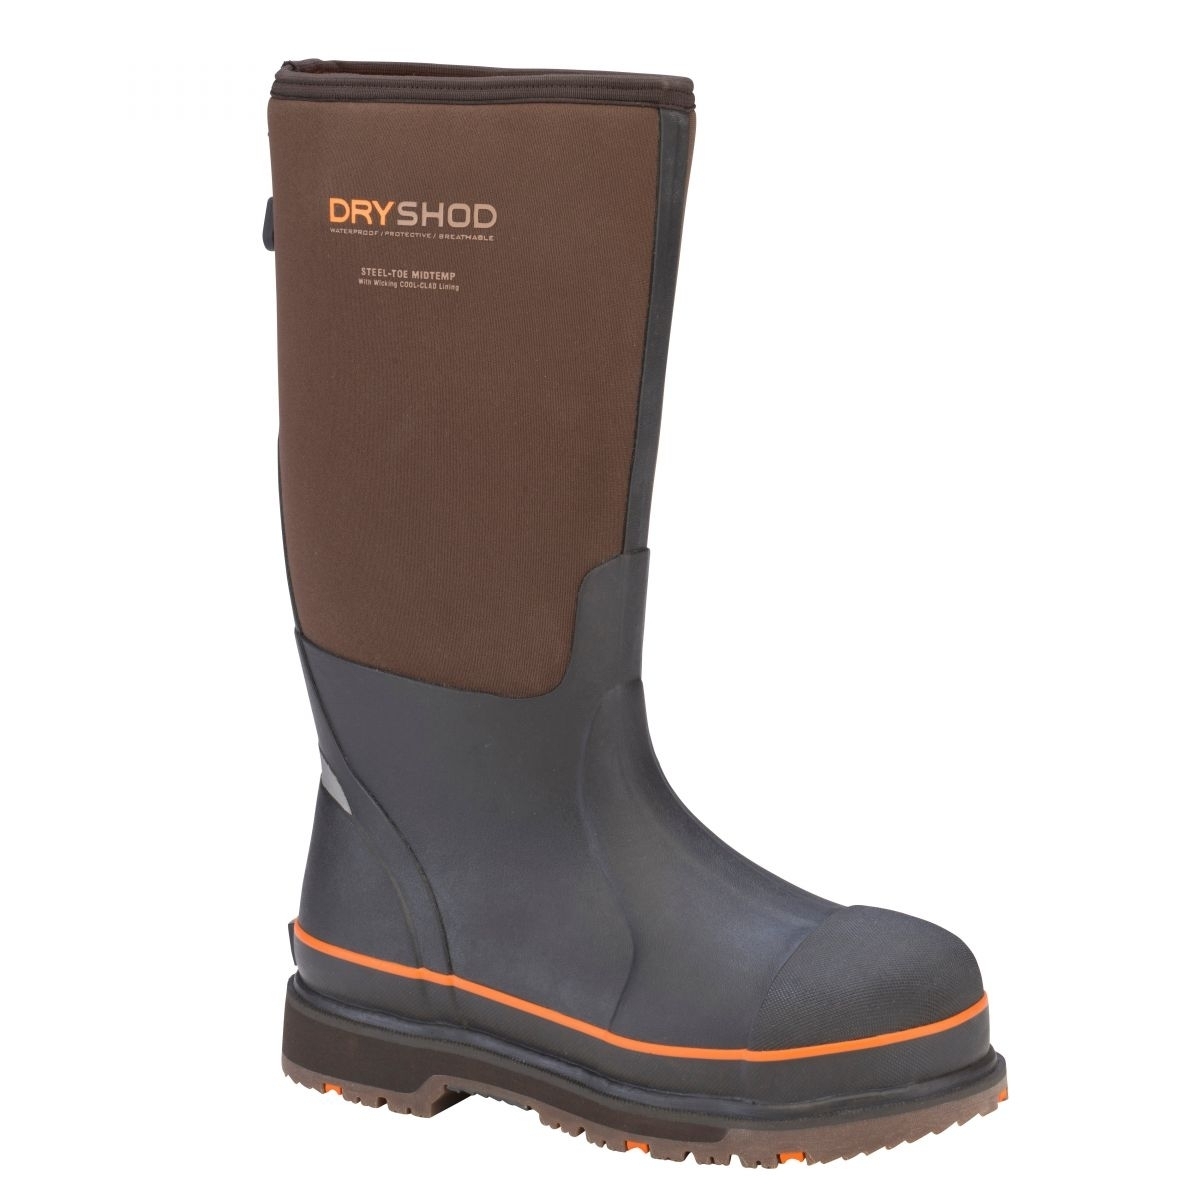 DRYSHOD WORK Men's Steel Toe WIXIT Cool-Cladâ¢ Waterproof Work Boot Brown/Orange - STT-UH-BR ONE SIZE BROWN/ORANGE - BROWN/ORANGE, 13